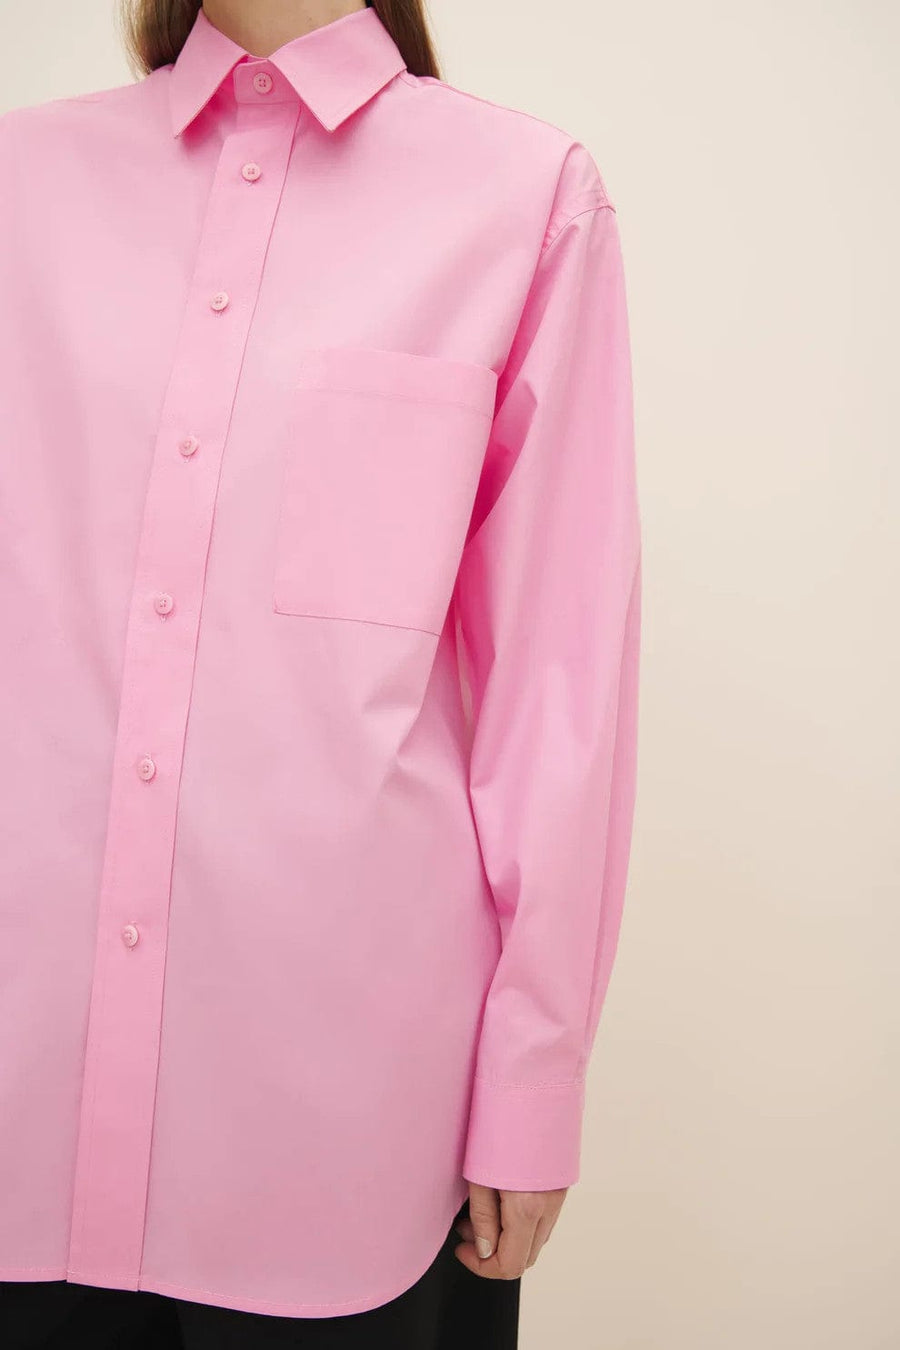 James Shirt Candy Pink